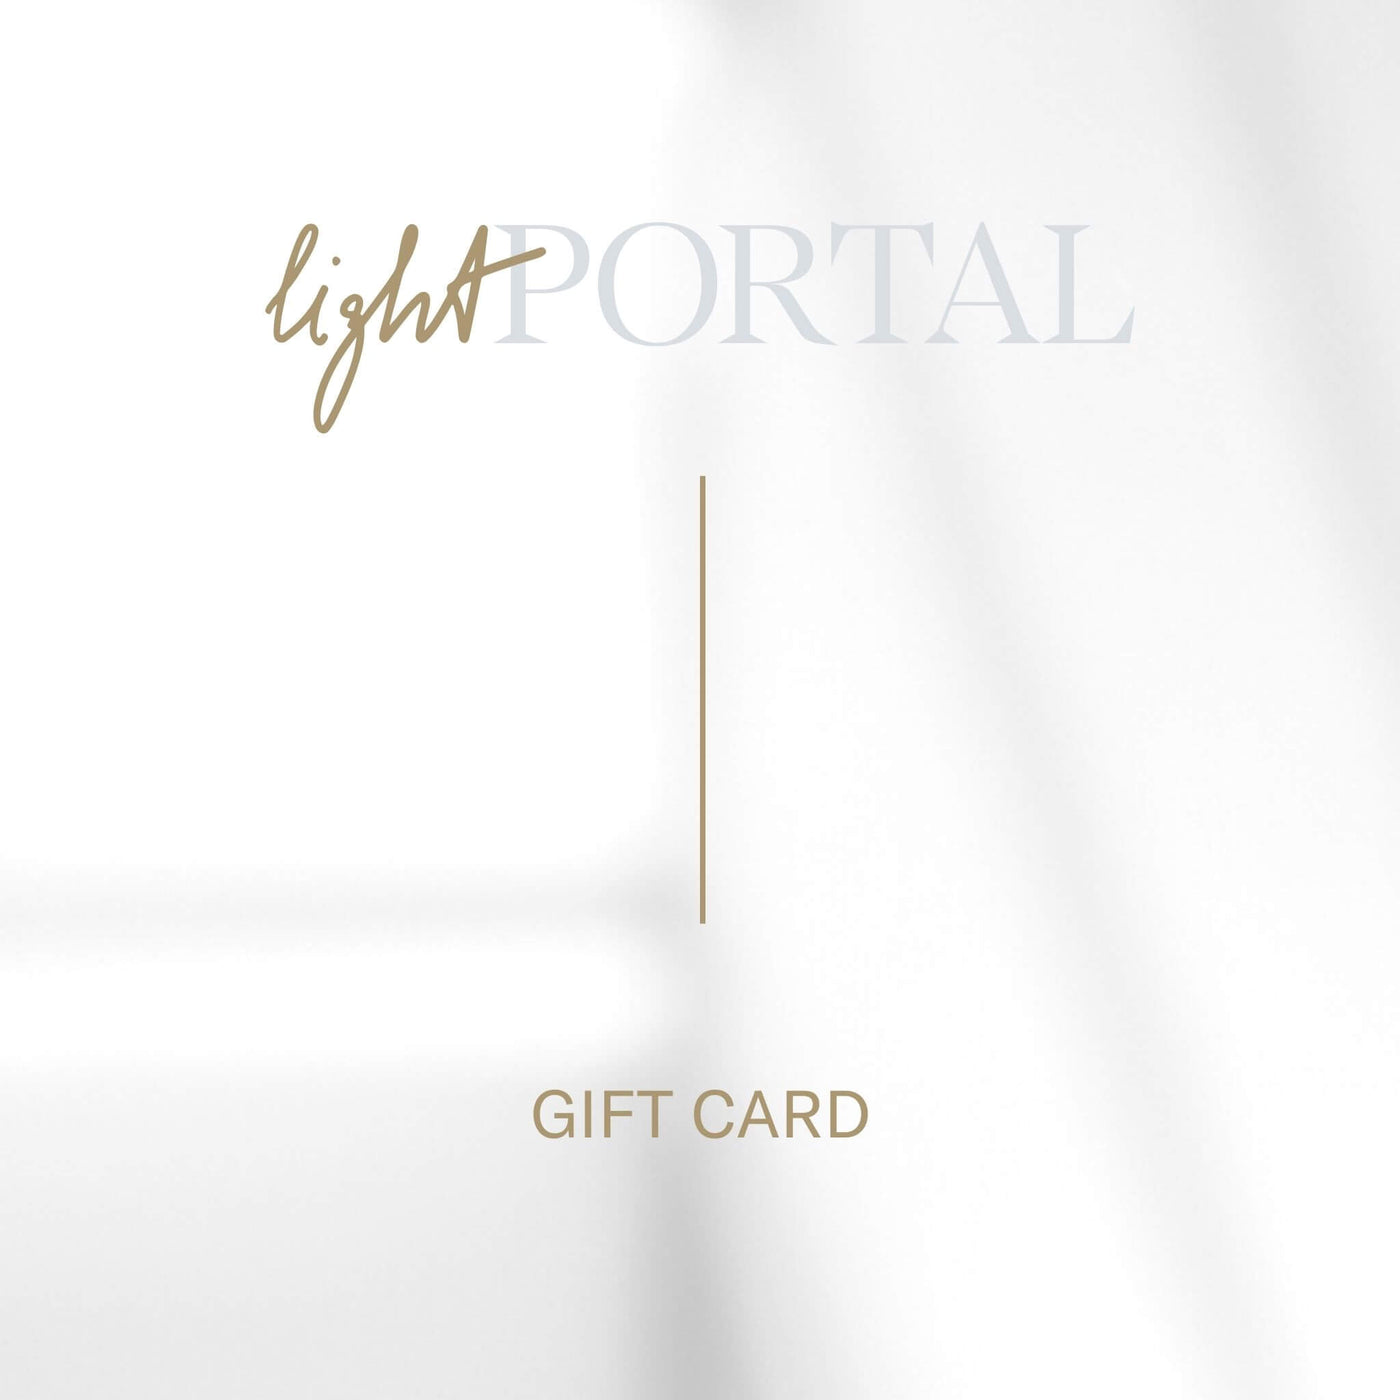 lightPORTAL Gift Card